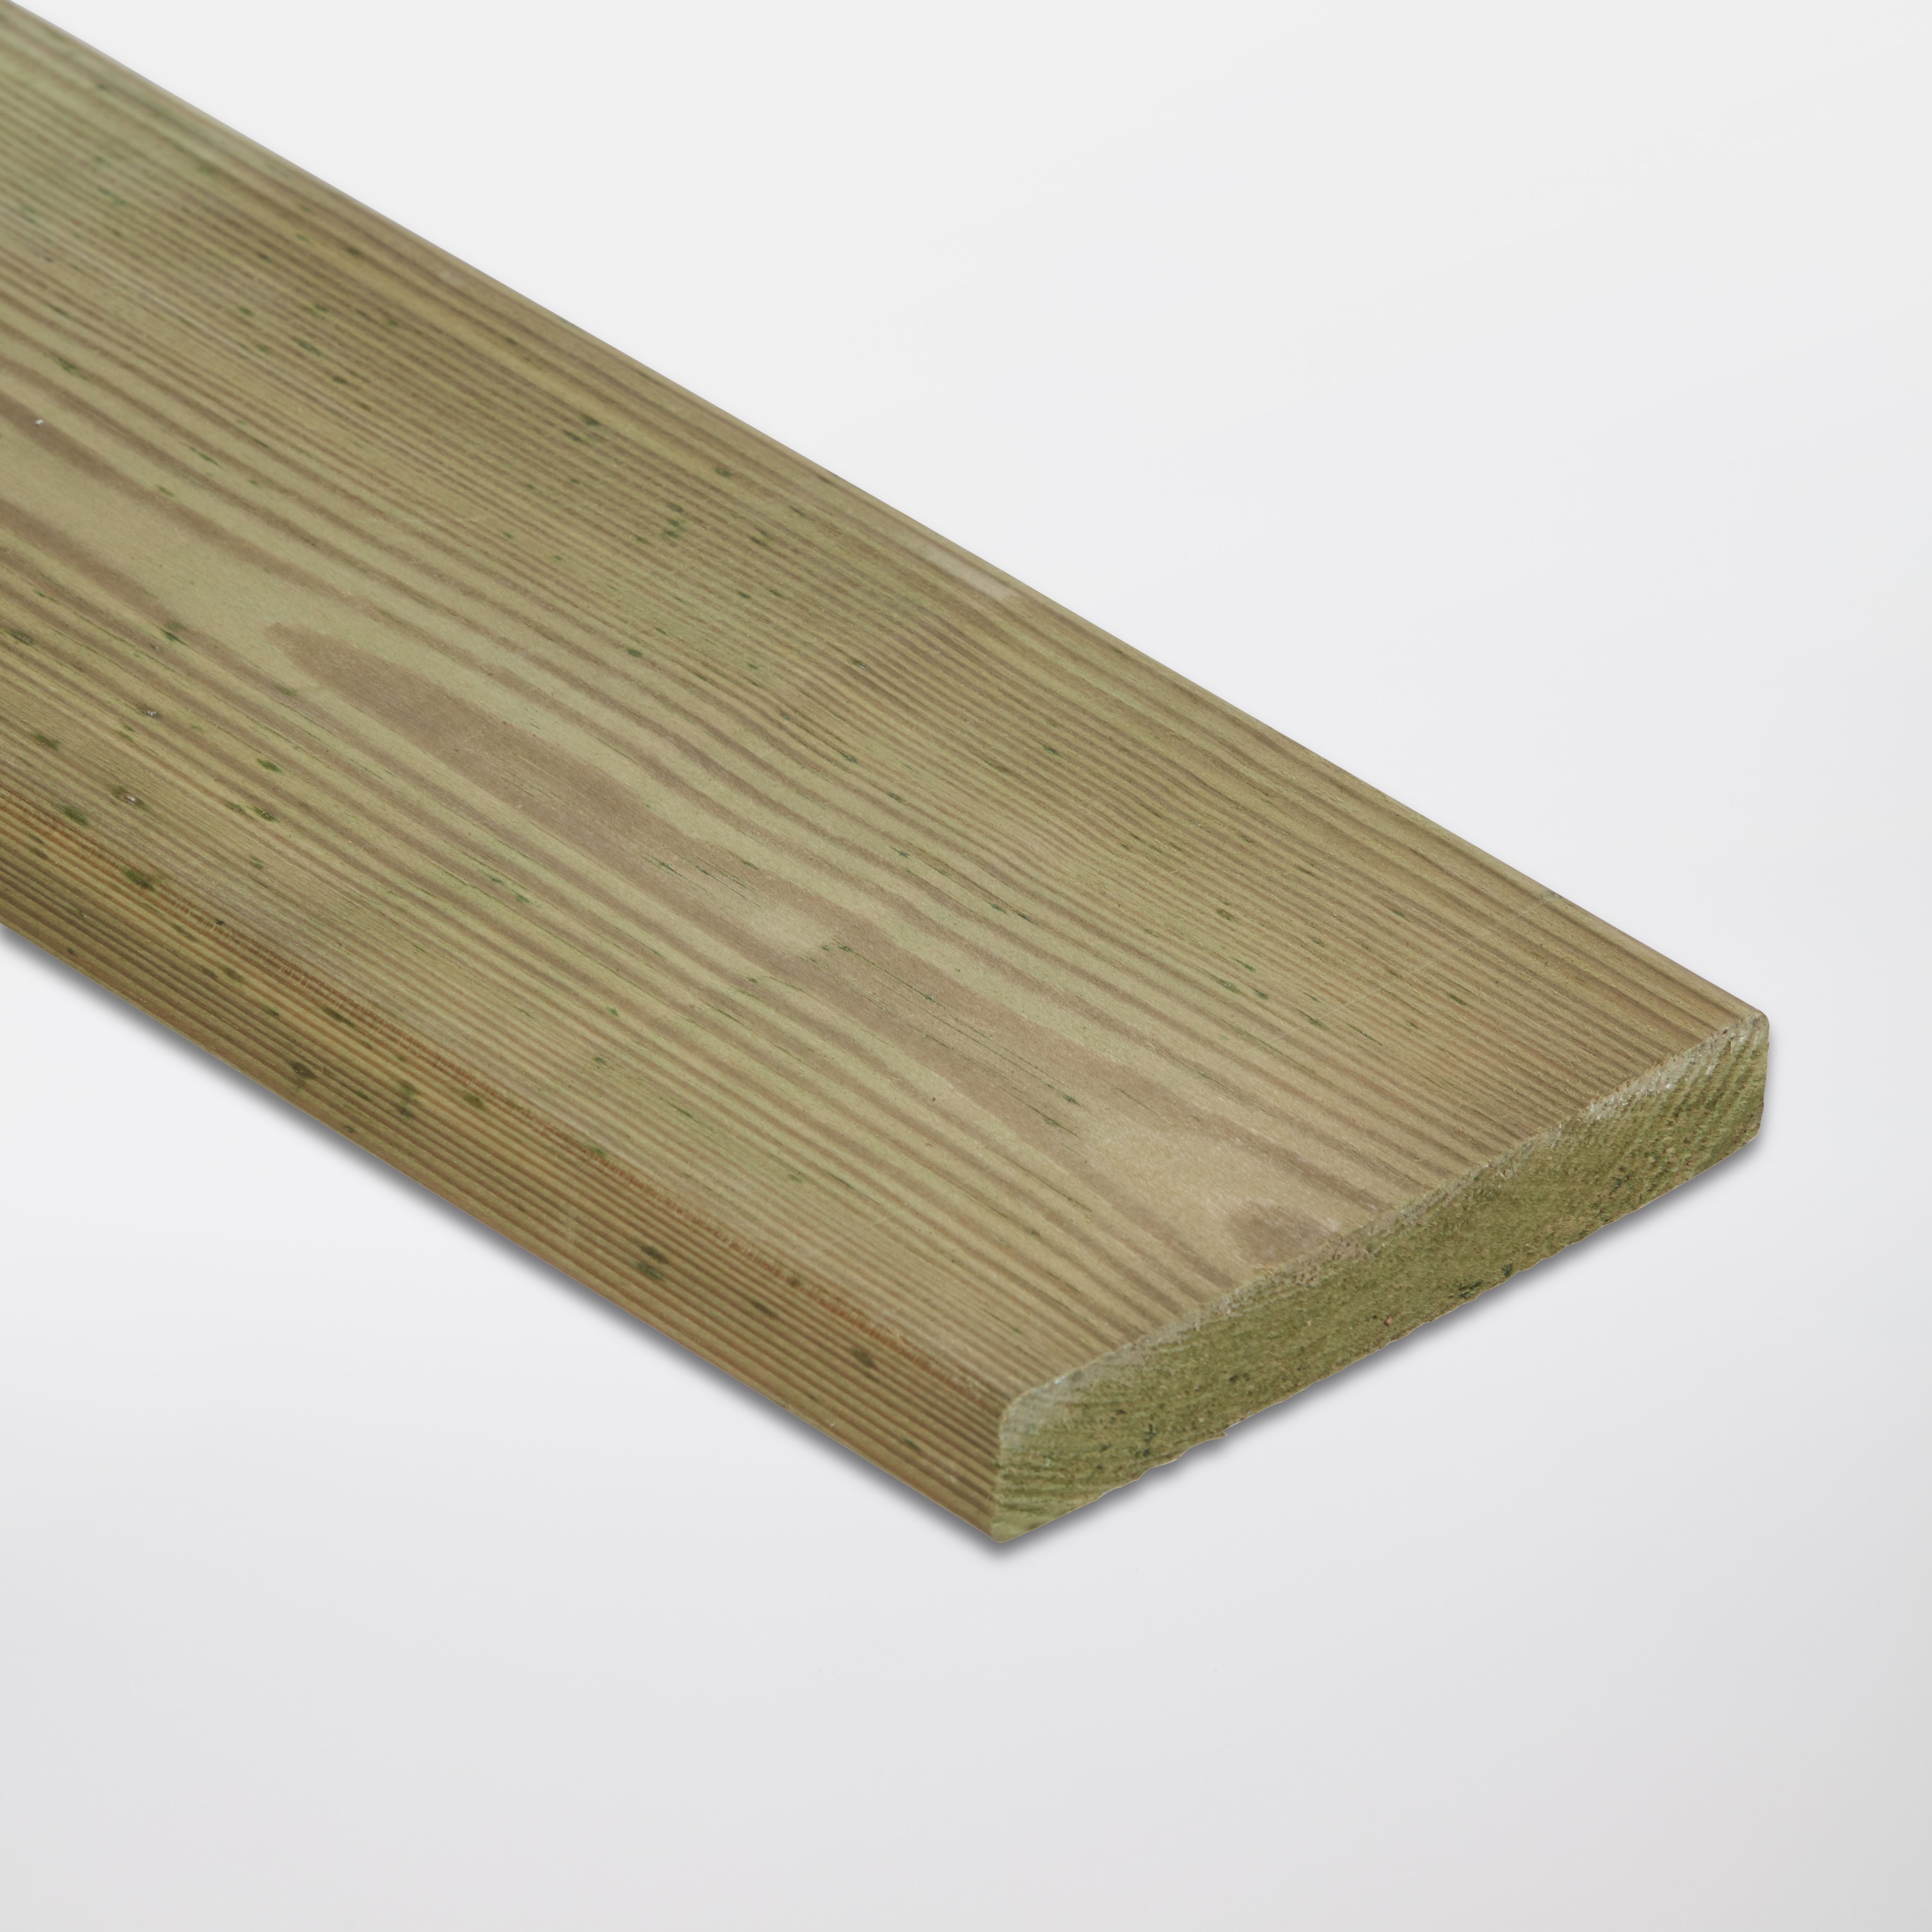 Blooma Lemhi Pressure treated Fence board (L)1.8m (W)21mm (T)21mm